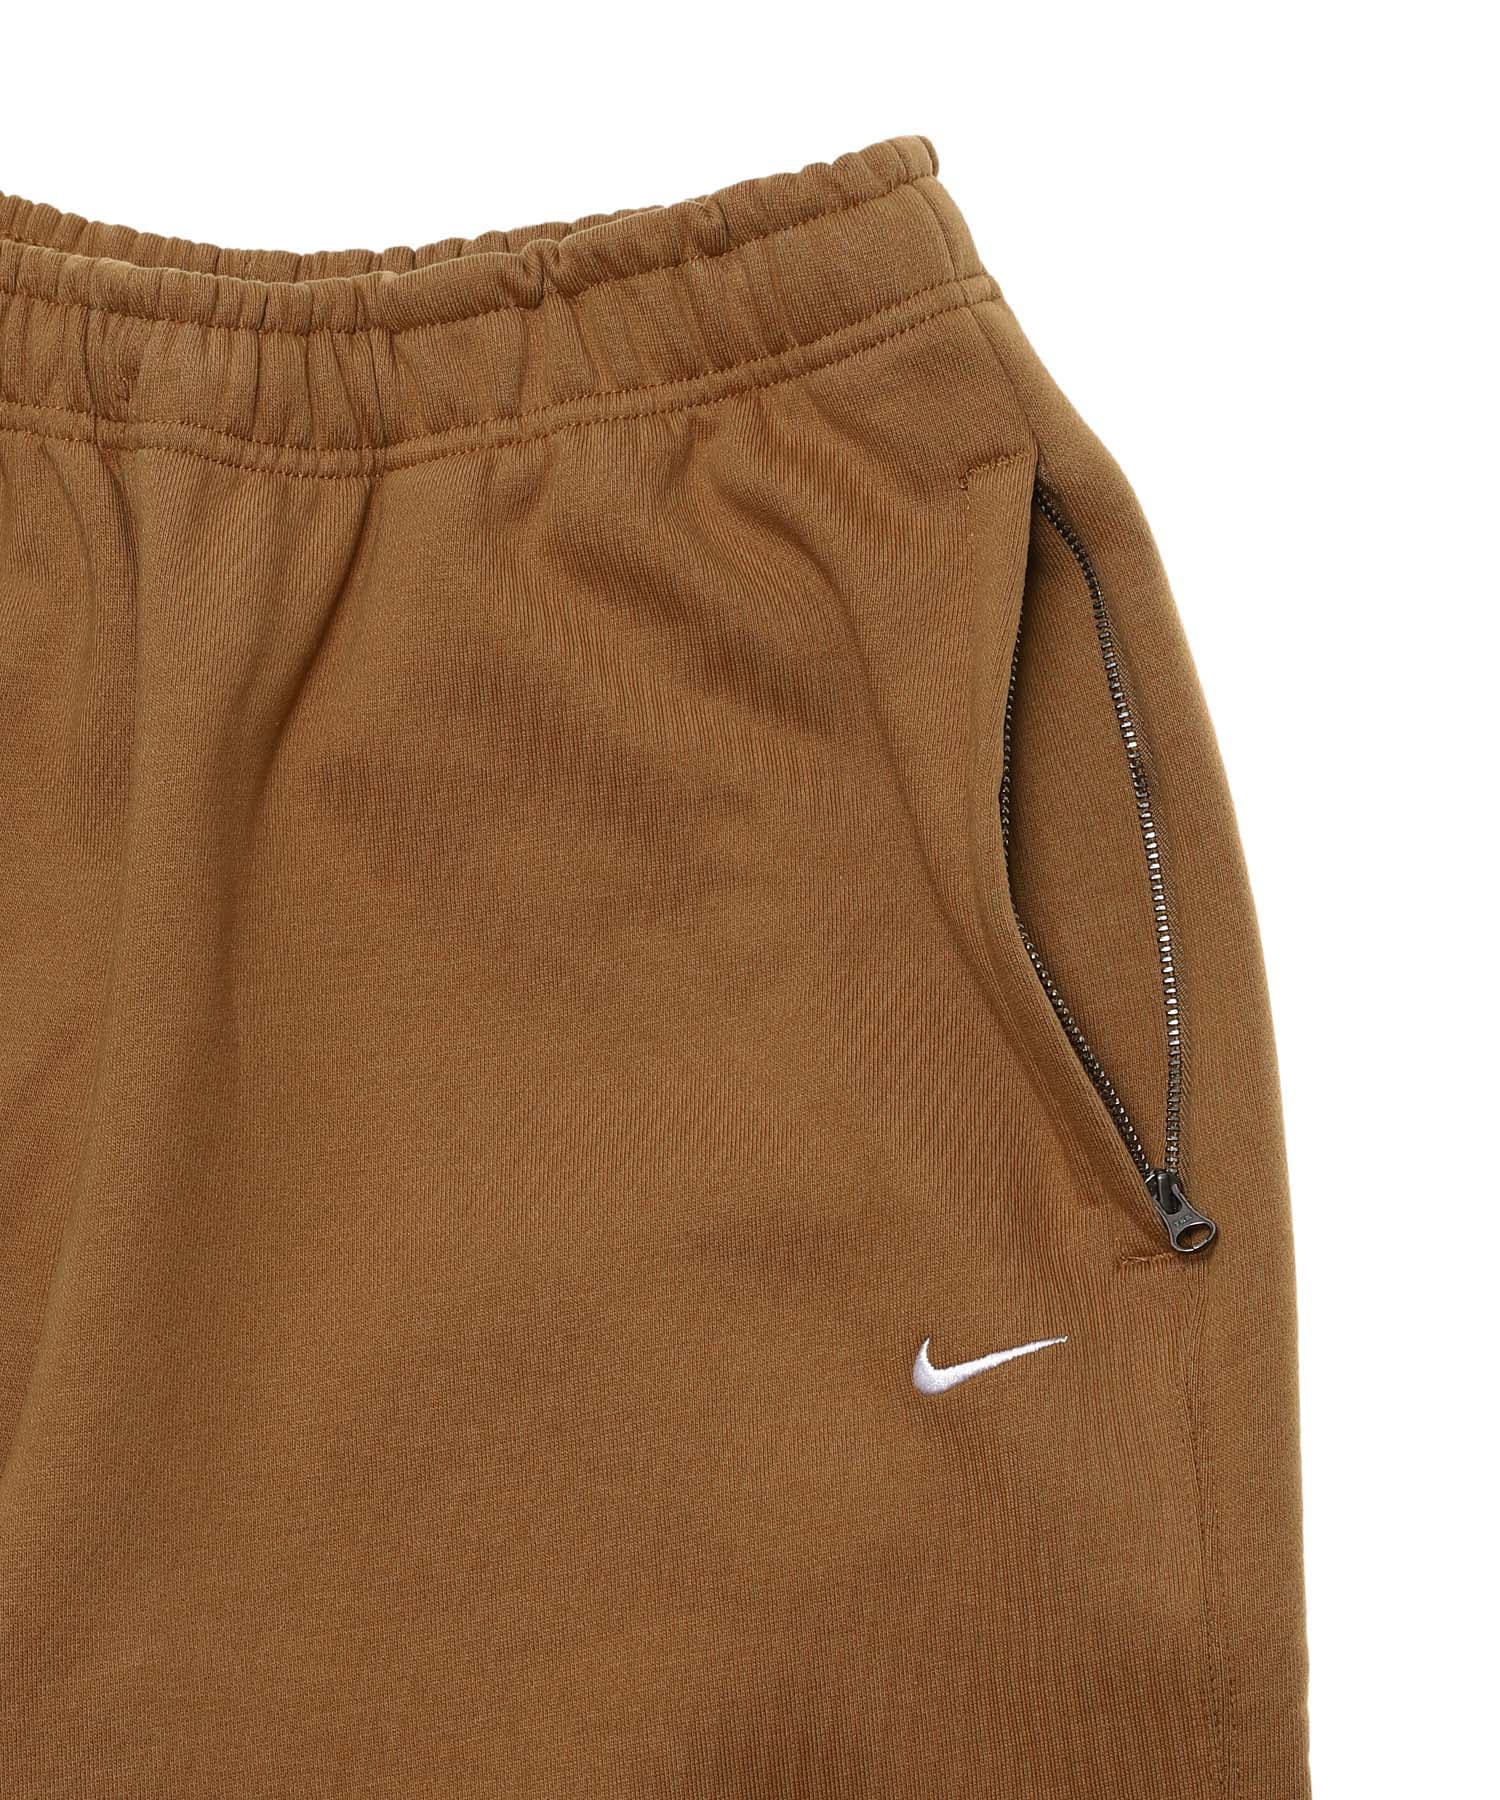 Nike Nrg Fleece Pant